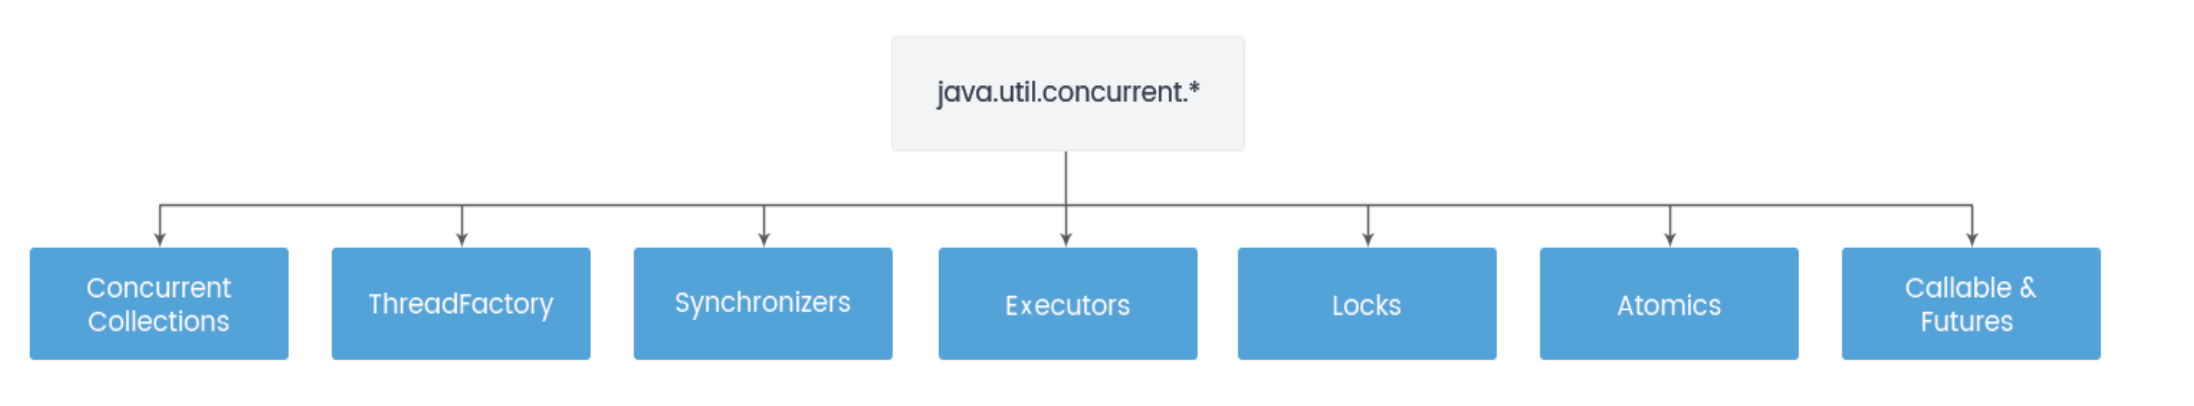 Java concurrency. Concurrent коллекции java. Java util concurrent. Пакеты java. Потокобезопасные коллекции java.